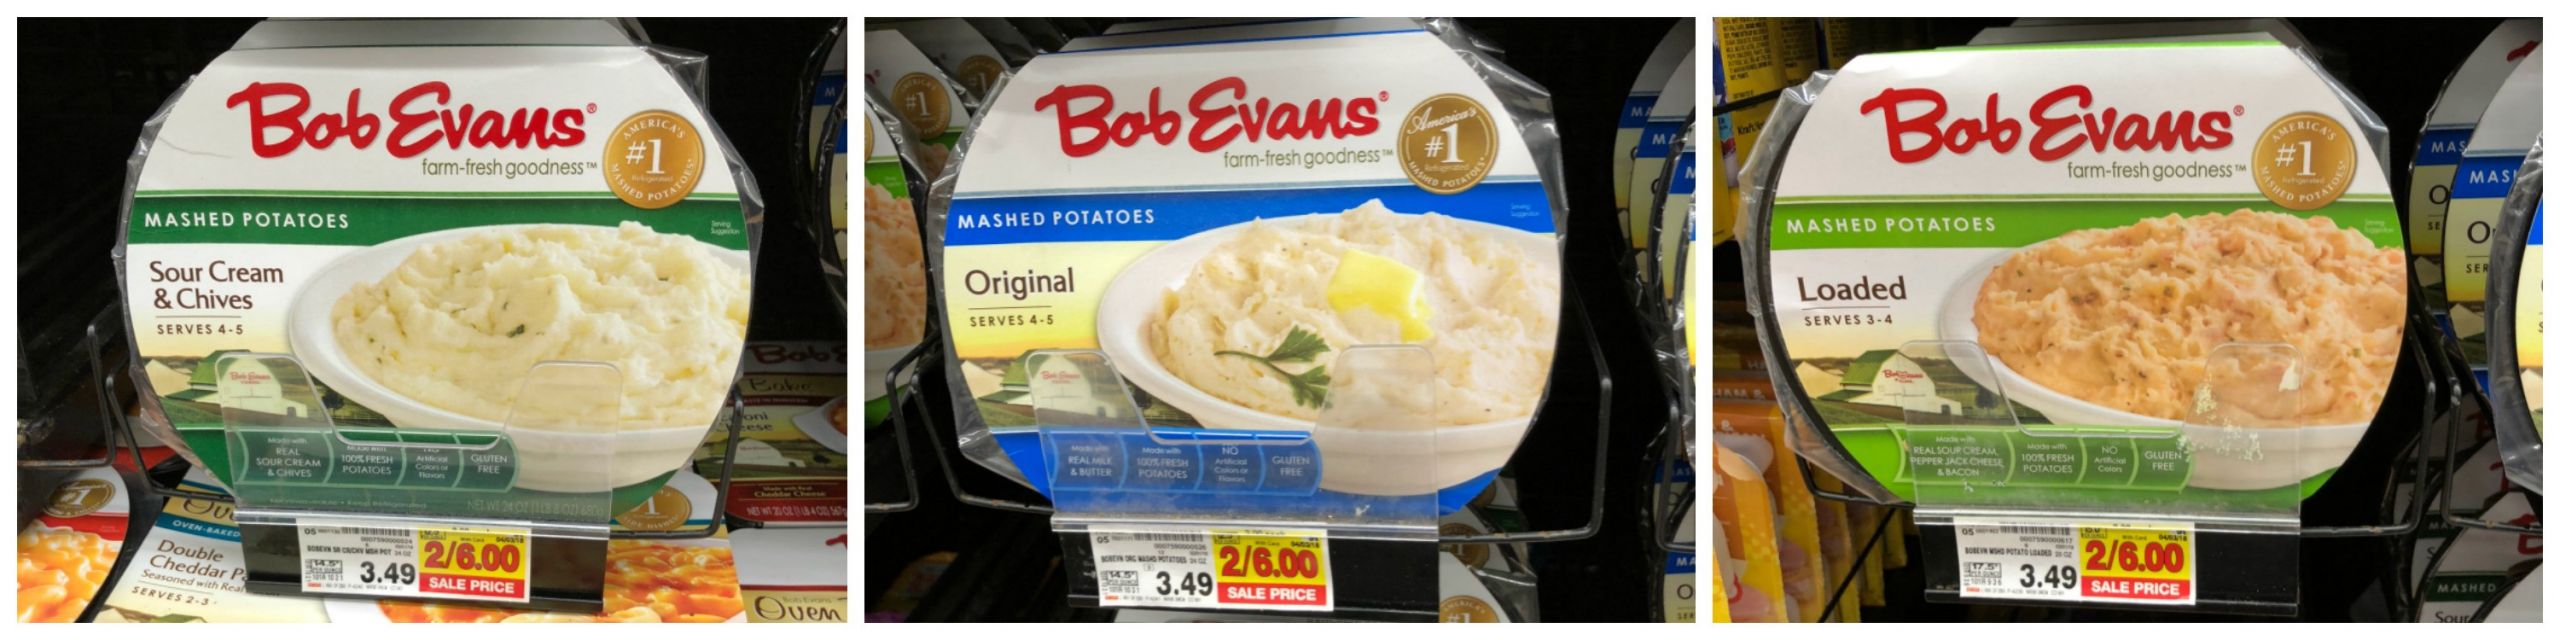 Bob Evans Refrigerated Side Dishes
 Bob Evans Refrigerated Side Dishes ONLY $2 50 each at